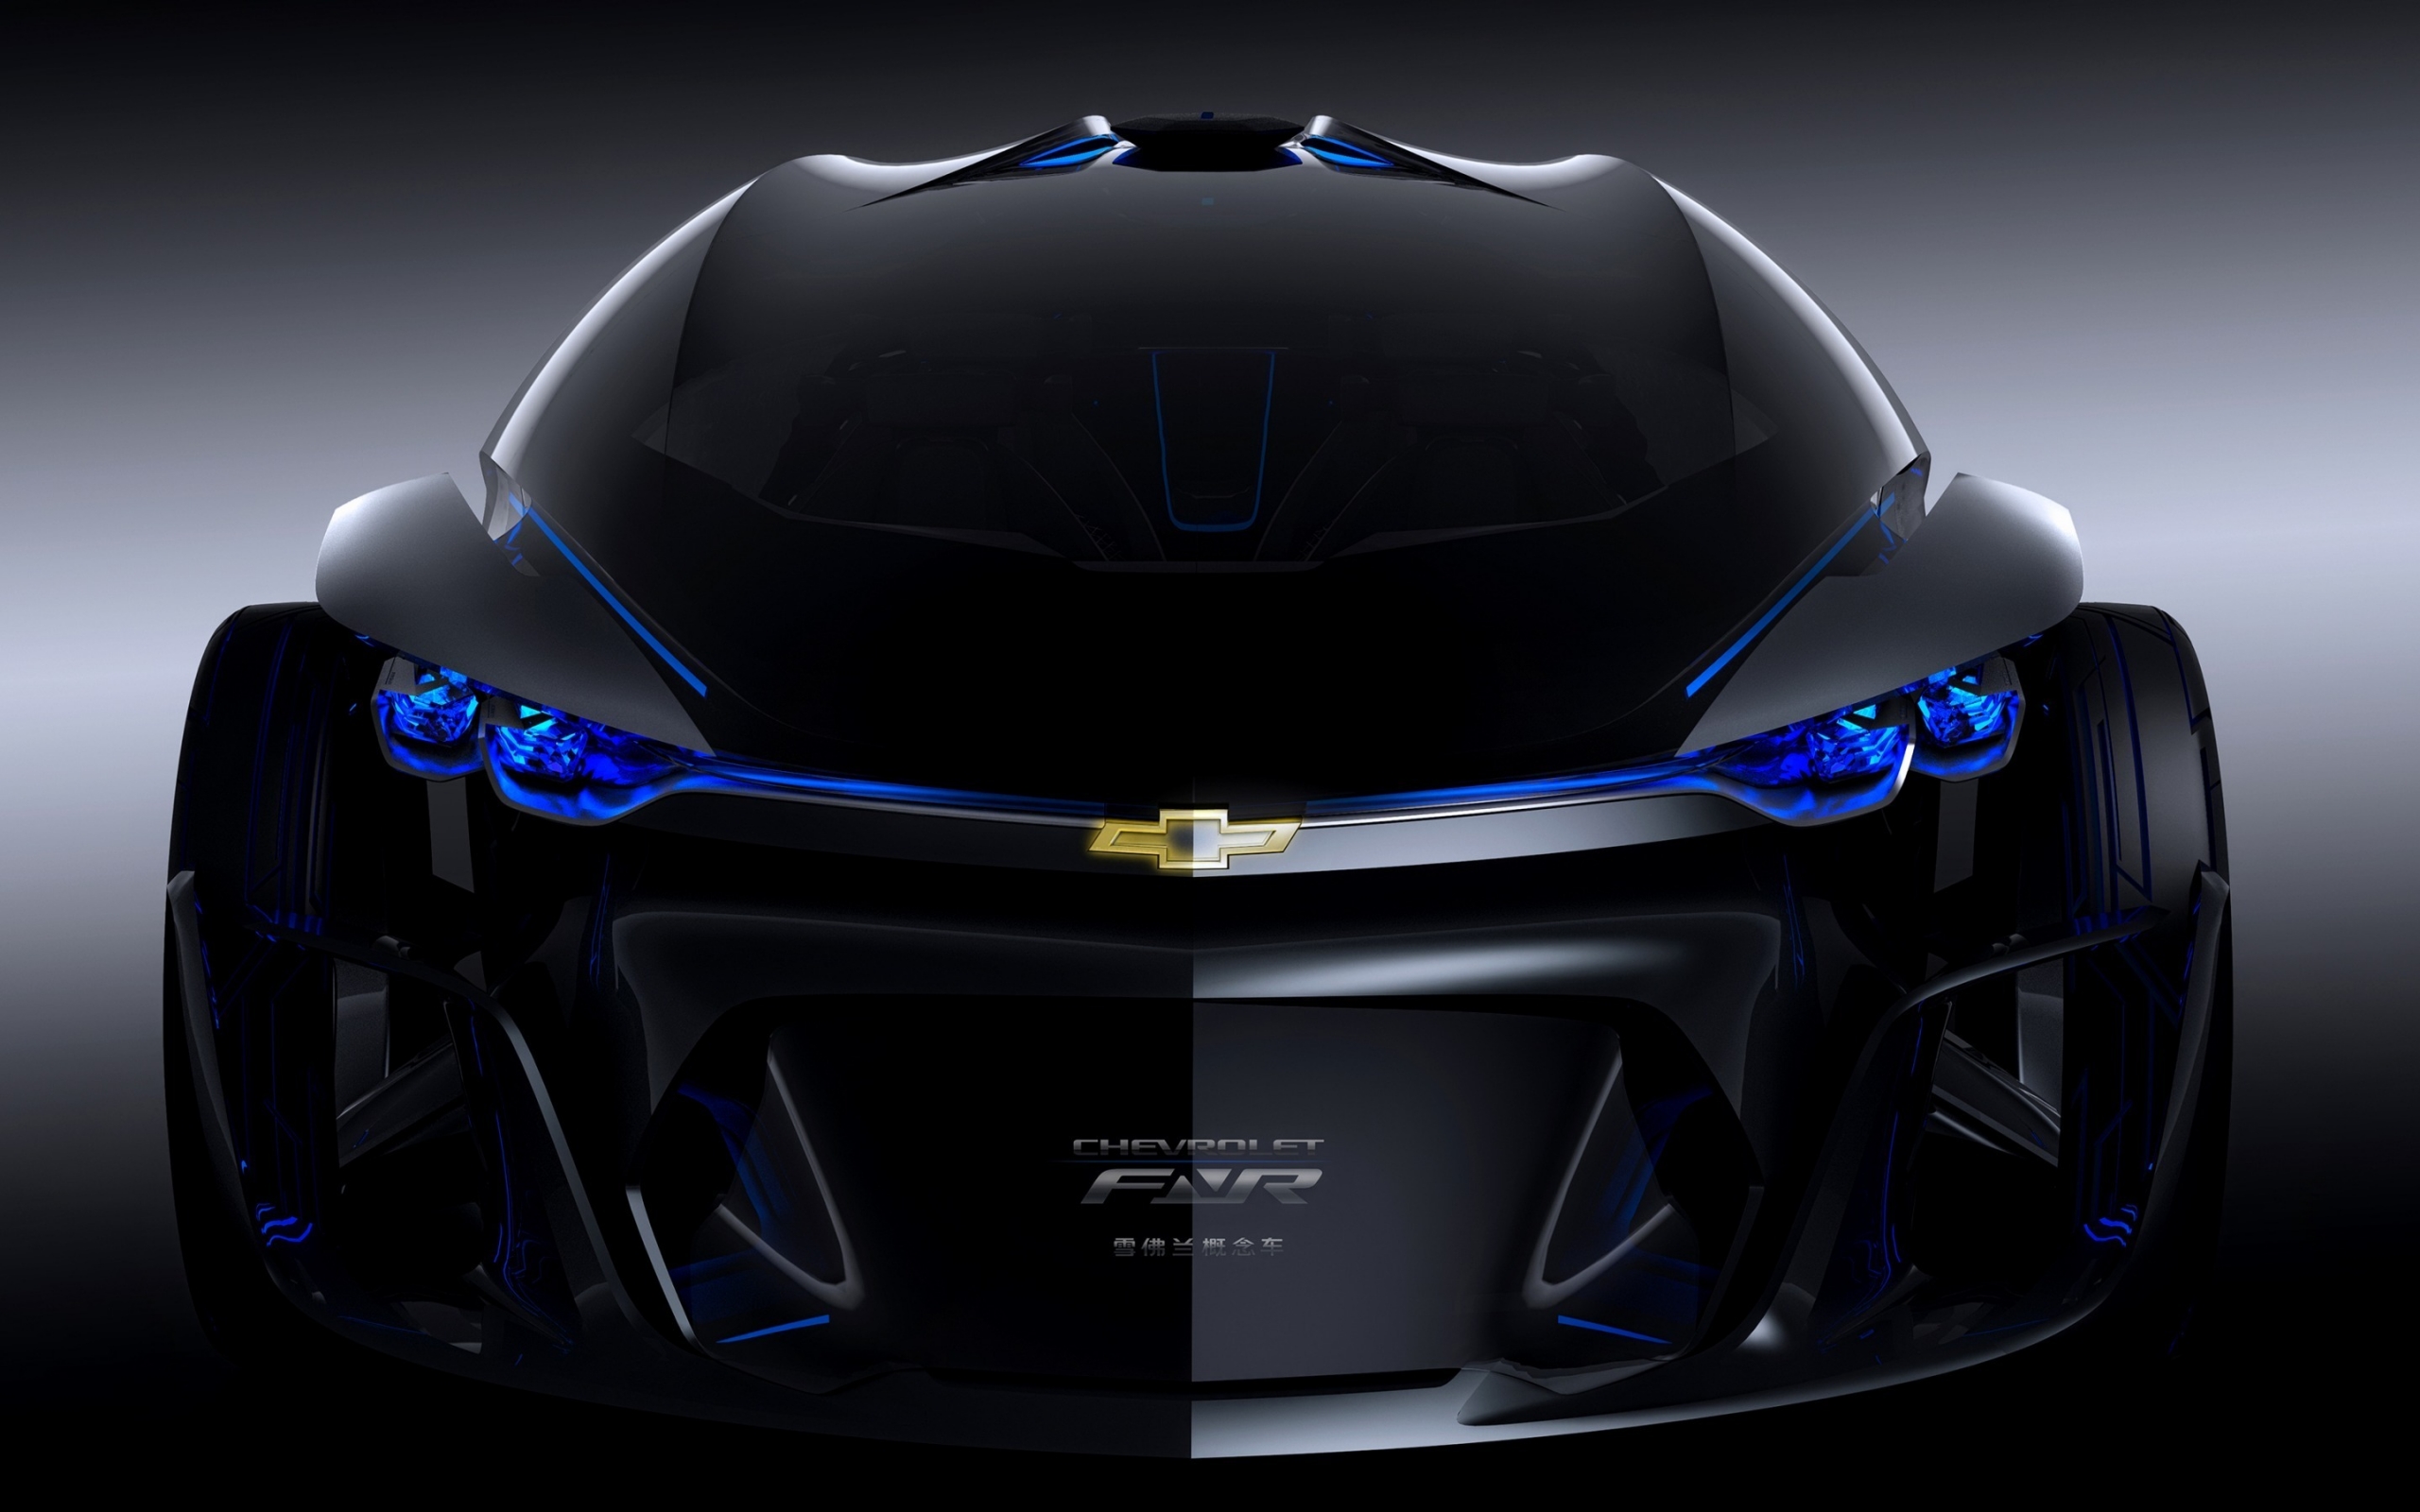  Chevrolet FNR Concept for 2560 x 1600 widescreen resolution